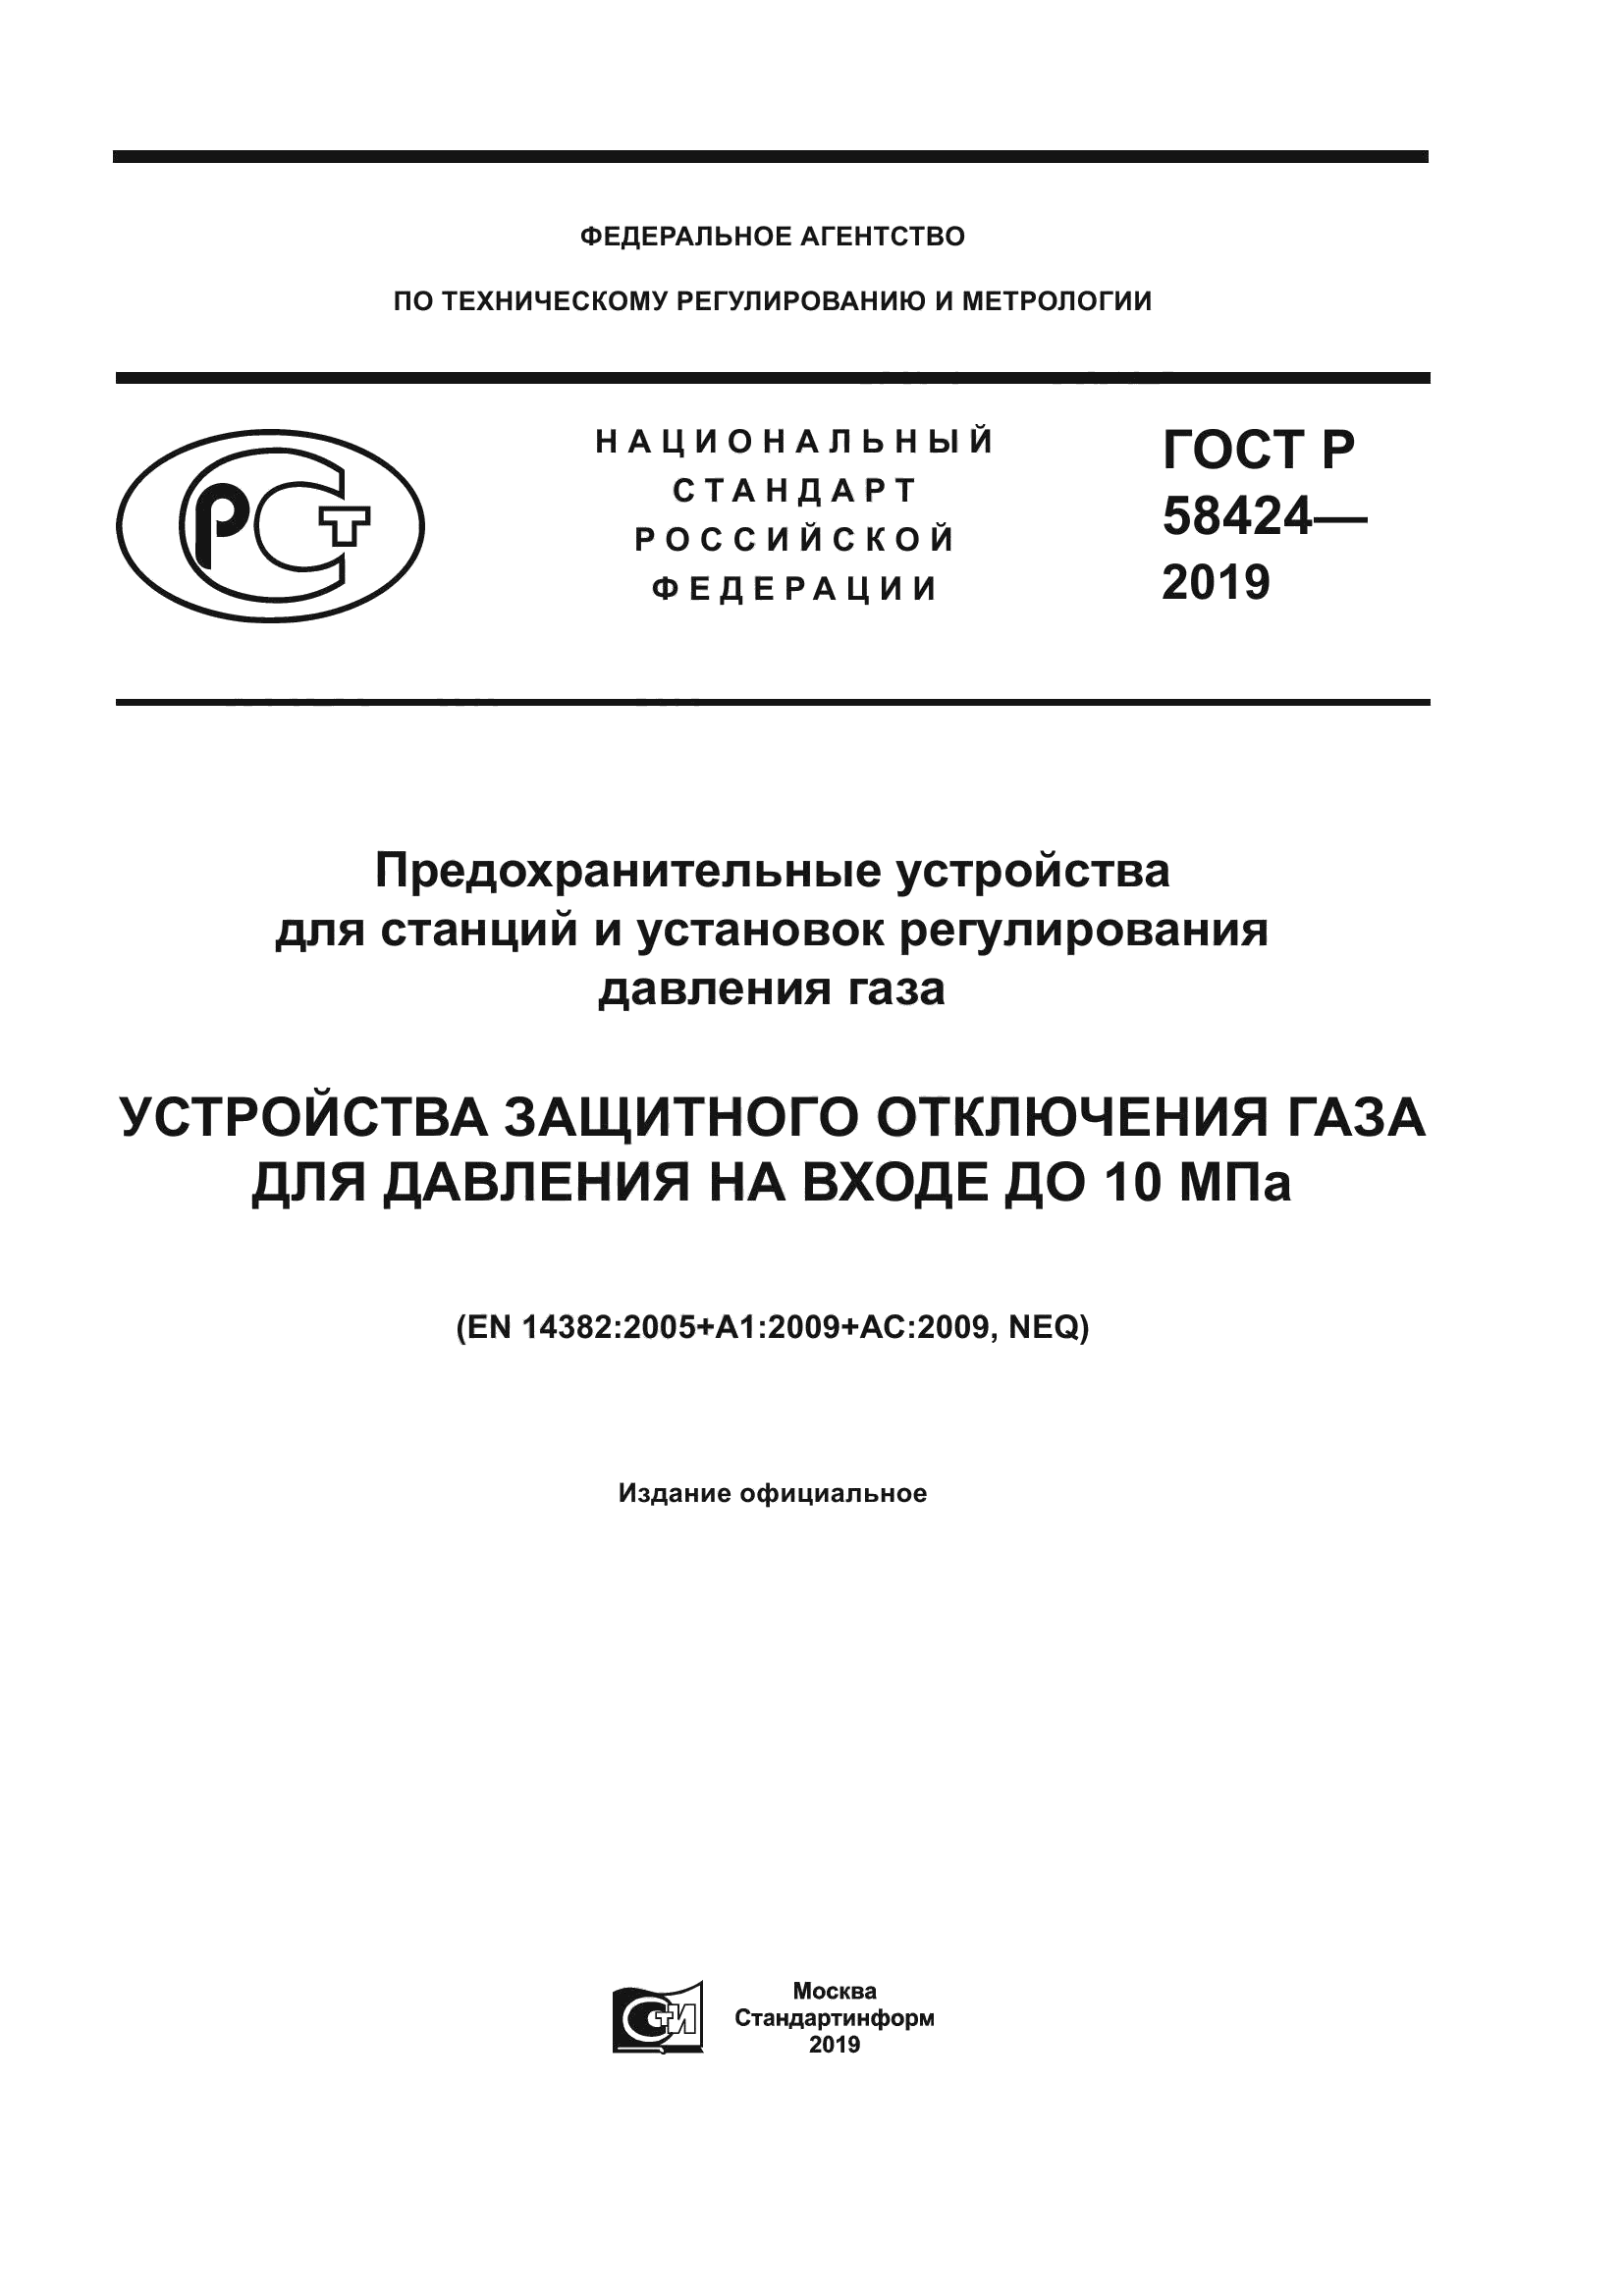 ГОСТ Р 58424-2019